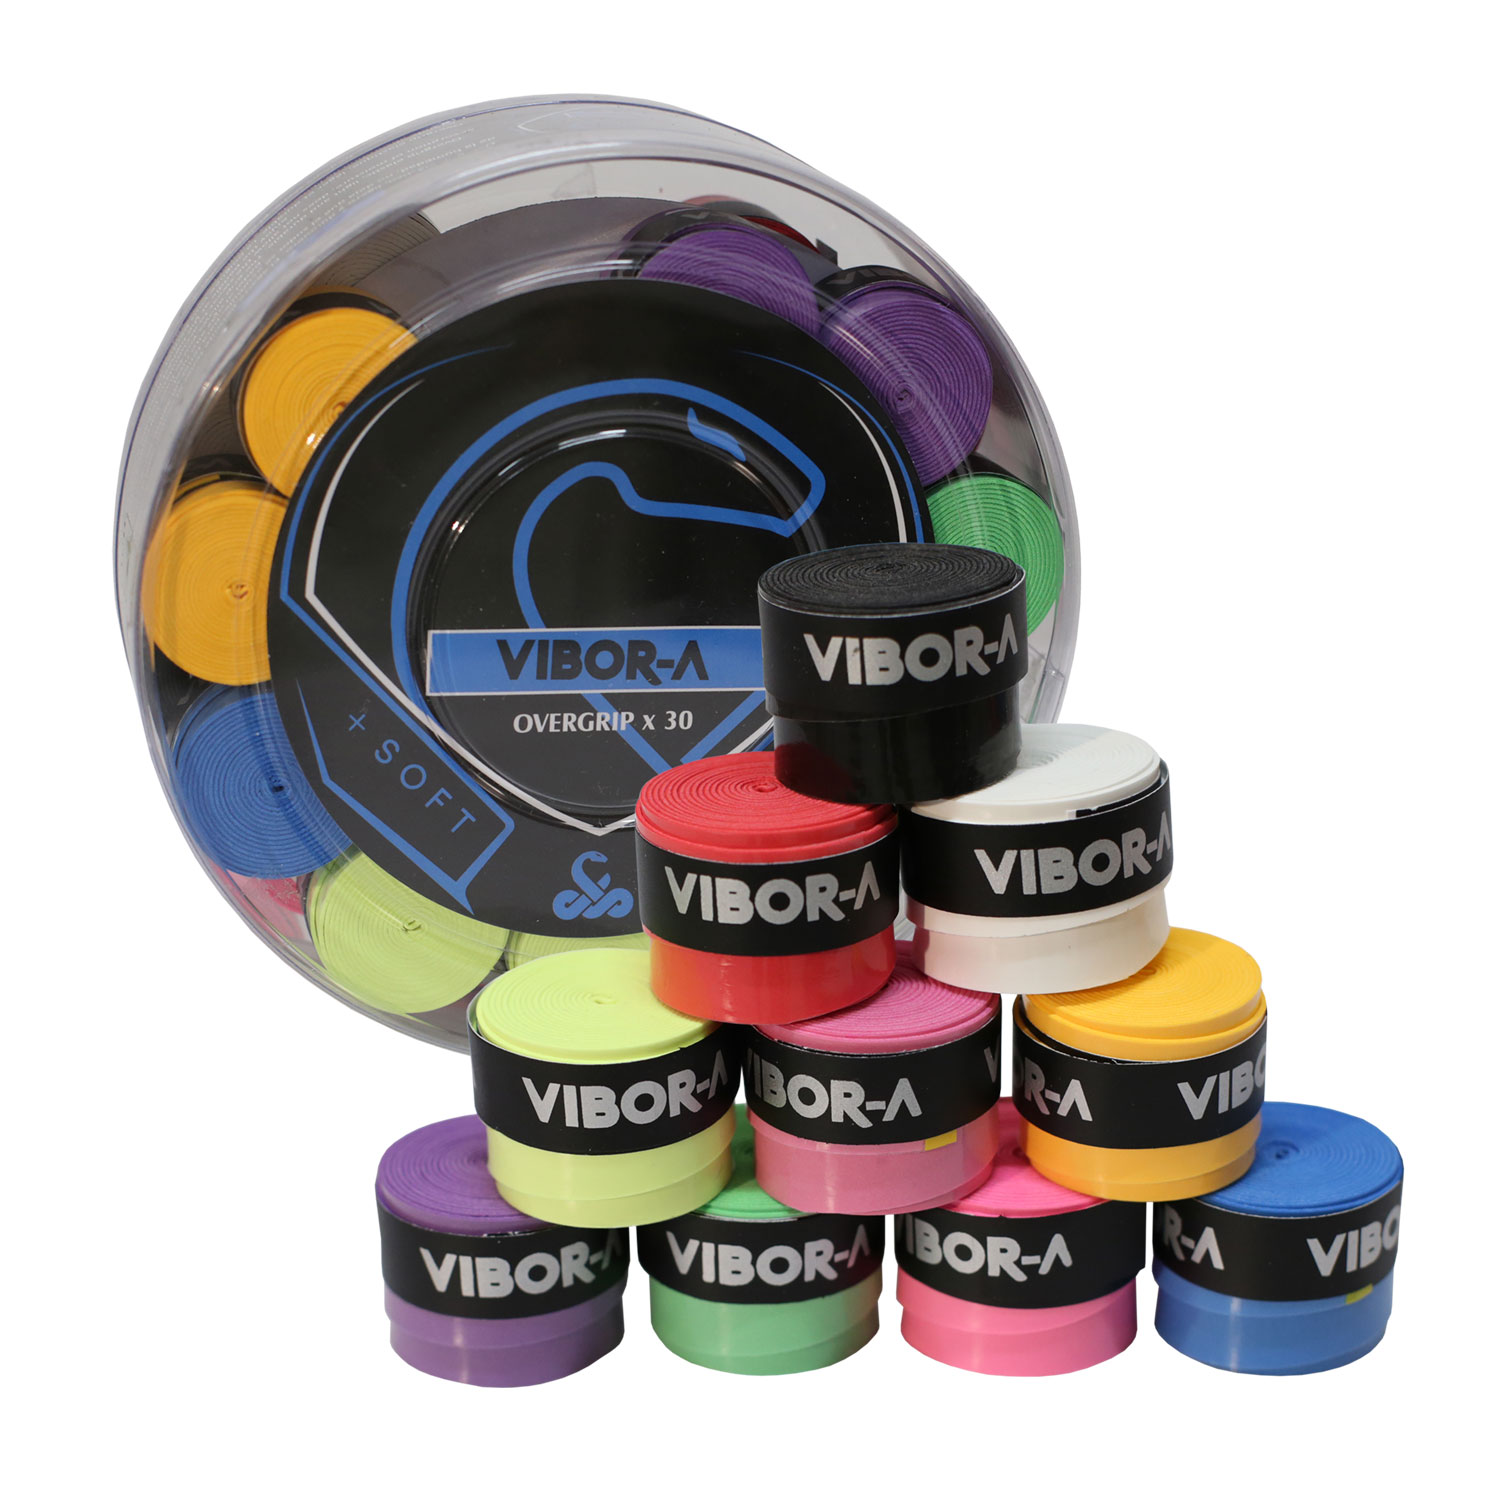 Vibor-A + Soft x 30 Sobregrips - Multicolor